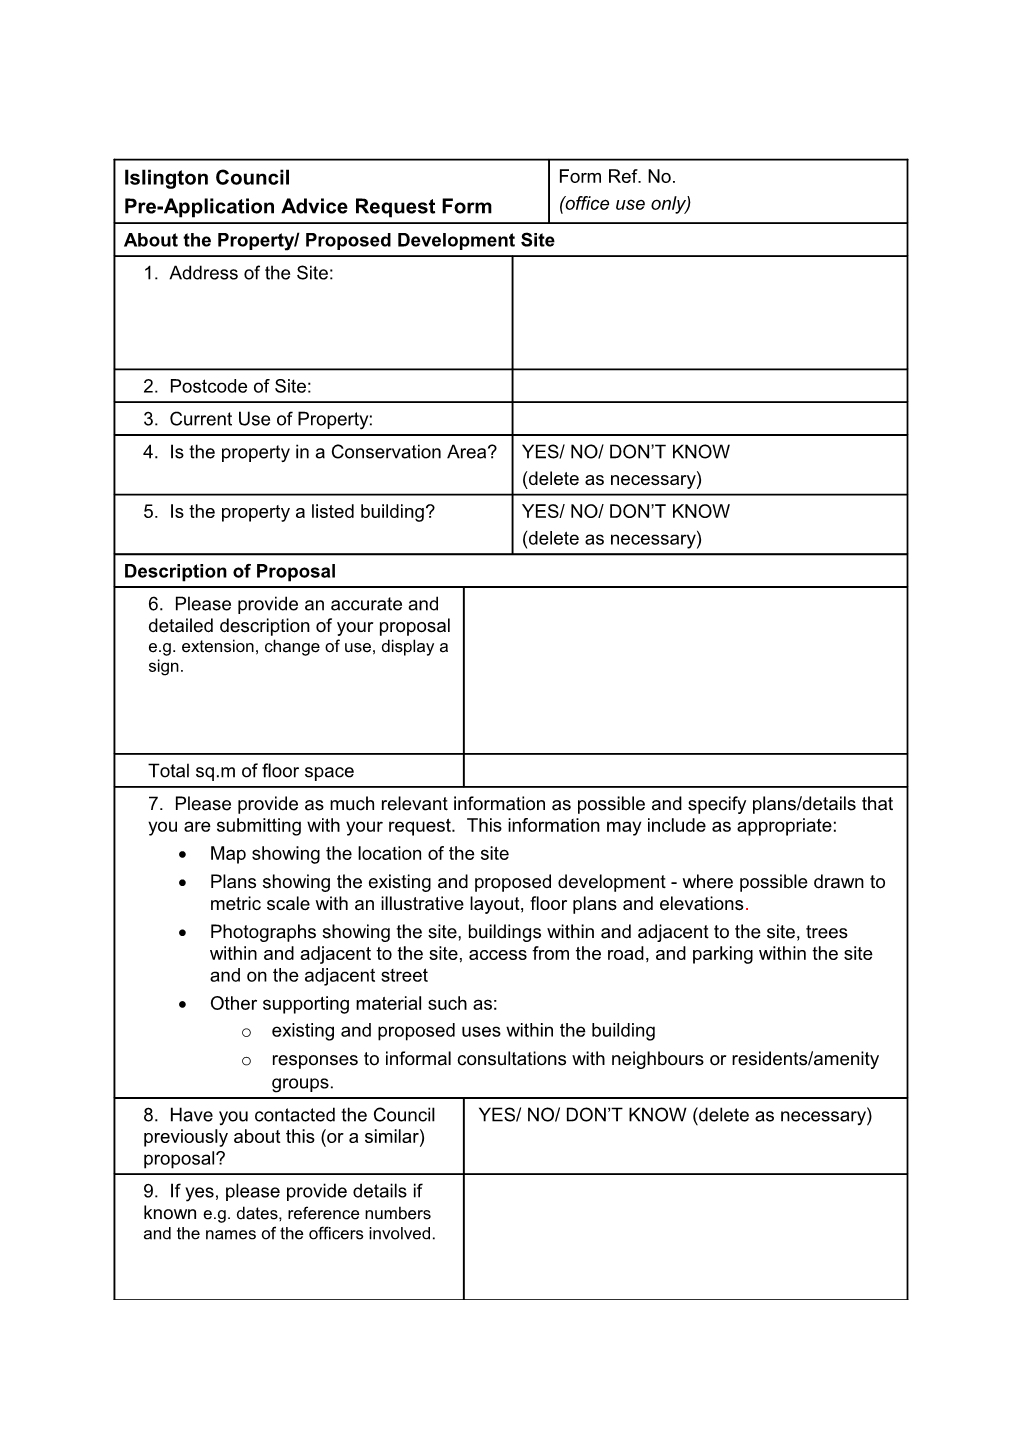 Pre-Application Advice Request Form